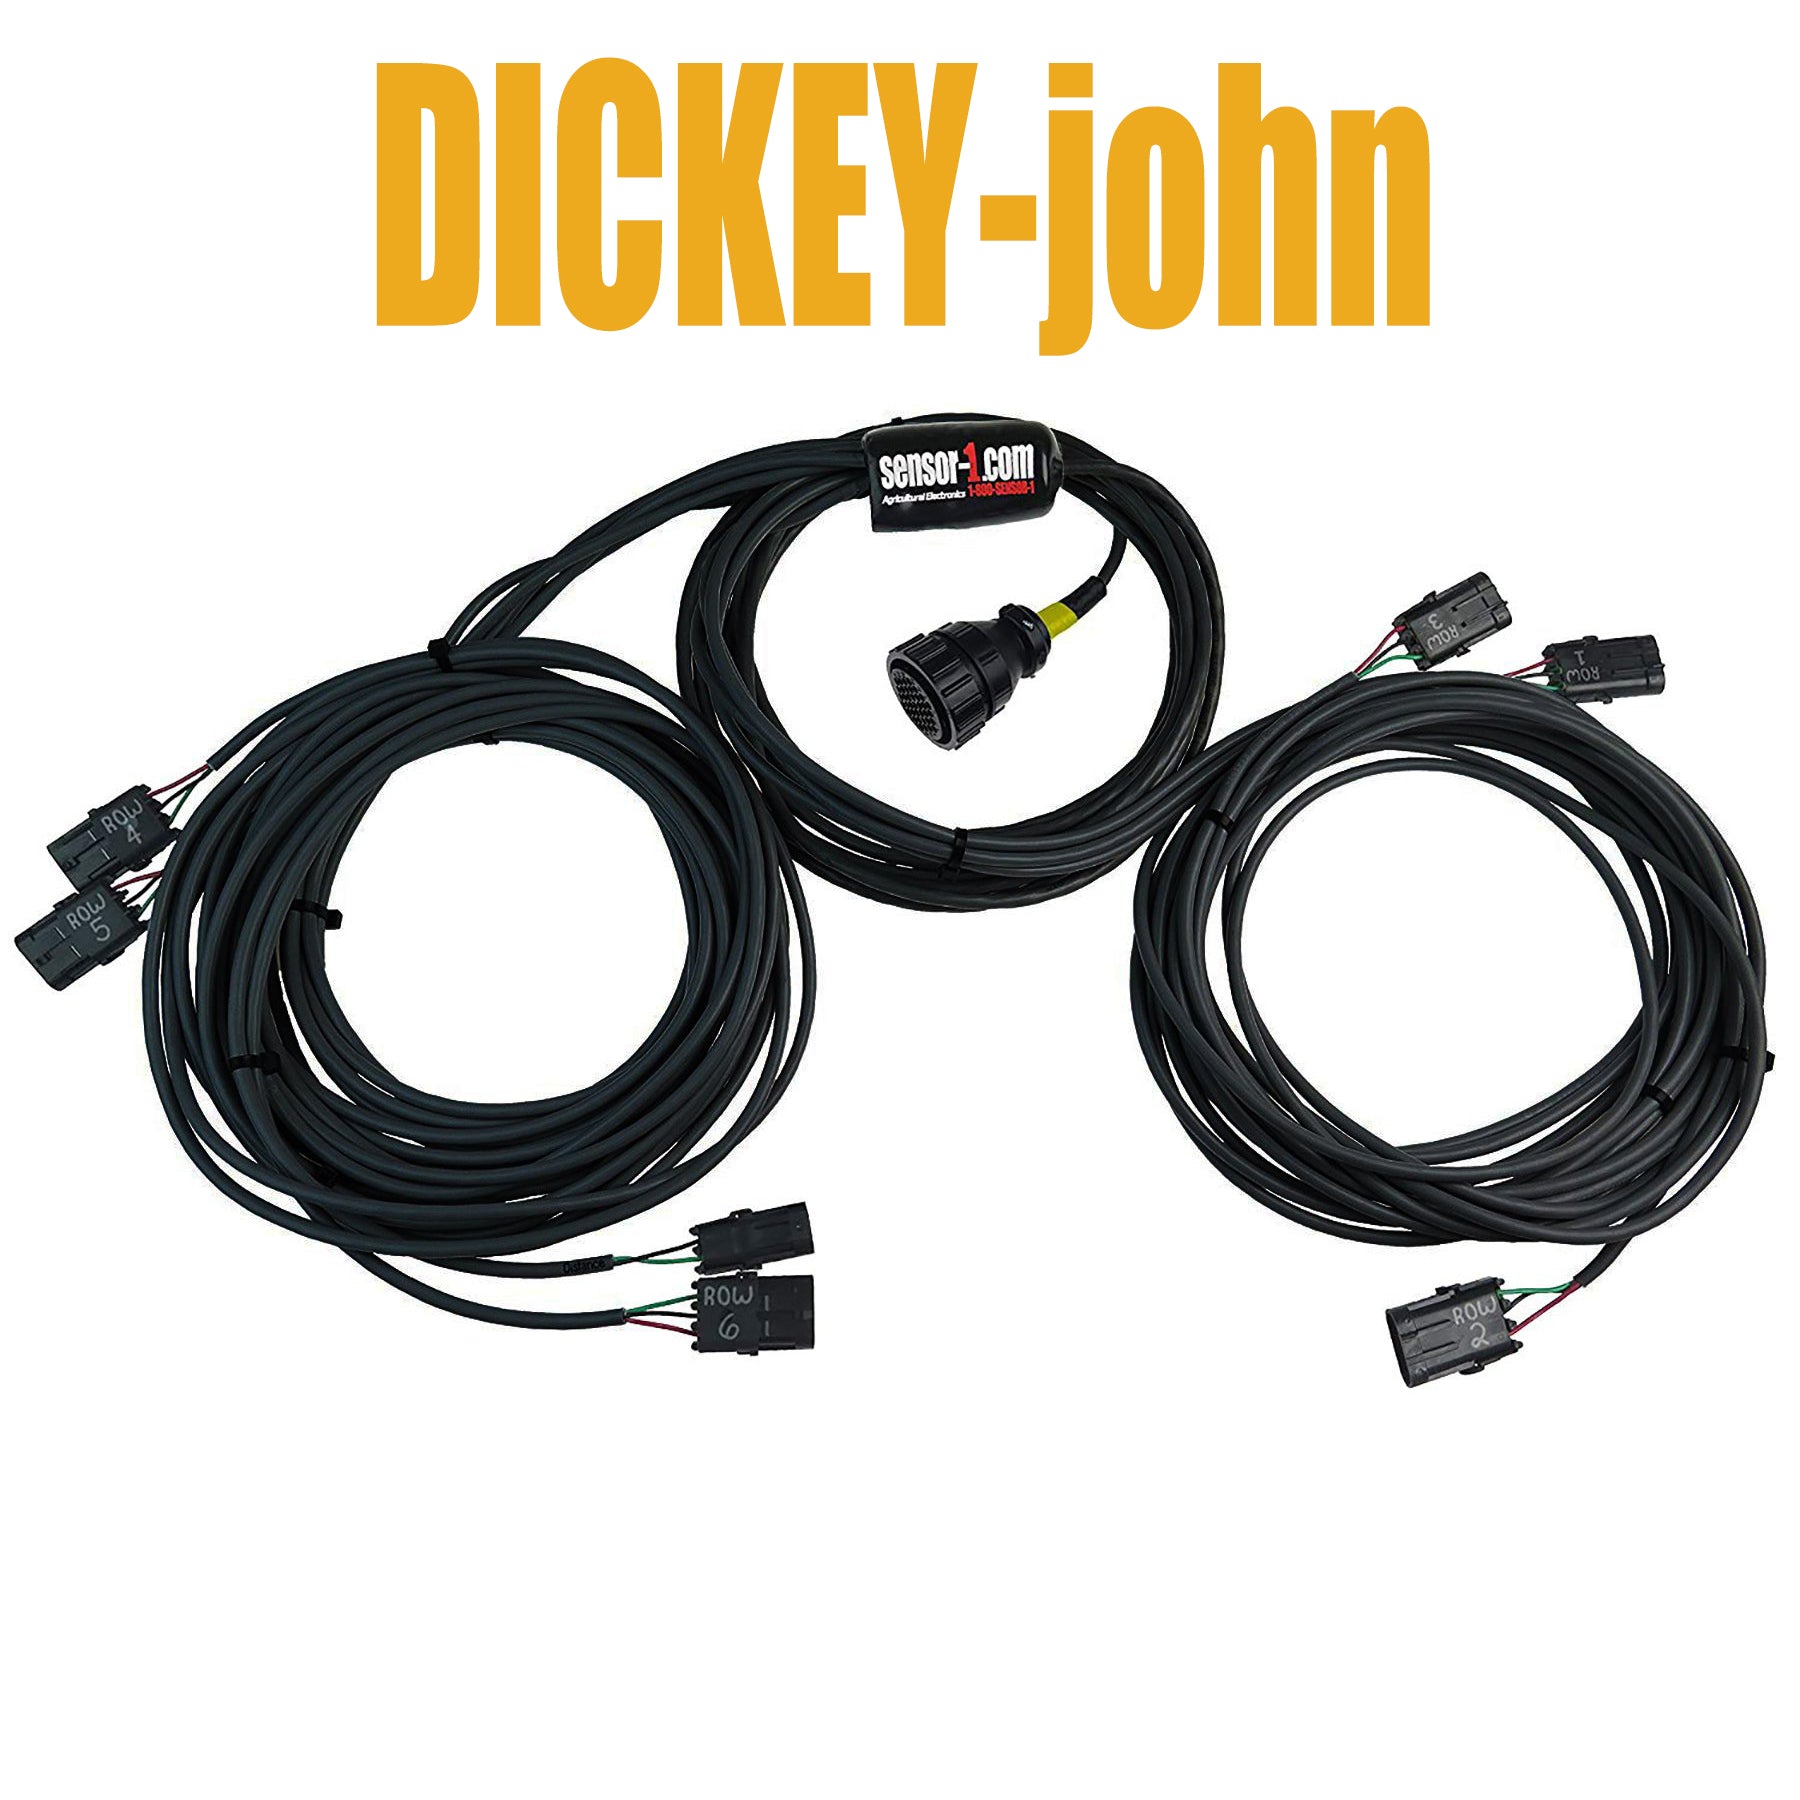 (1) Planter Harnesses for Dickey-john Monitors | 4-12 Rows